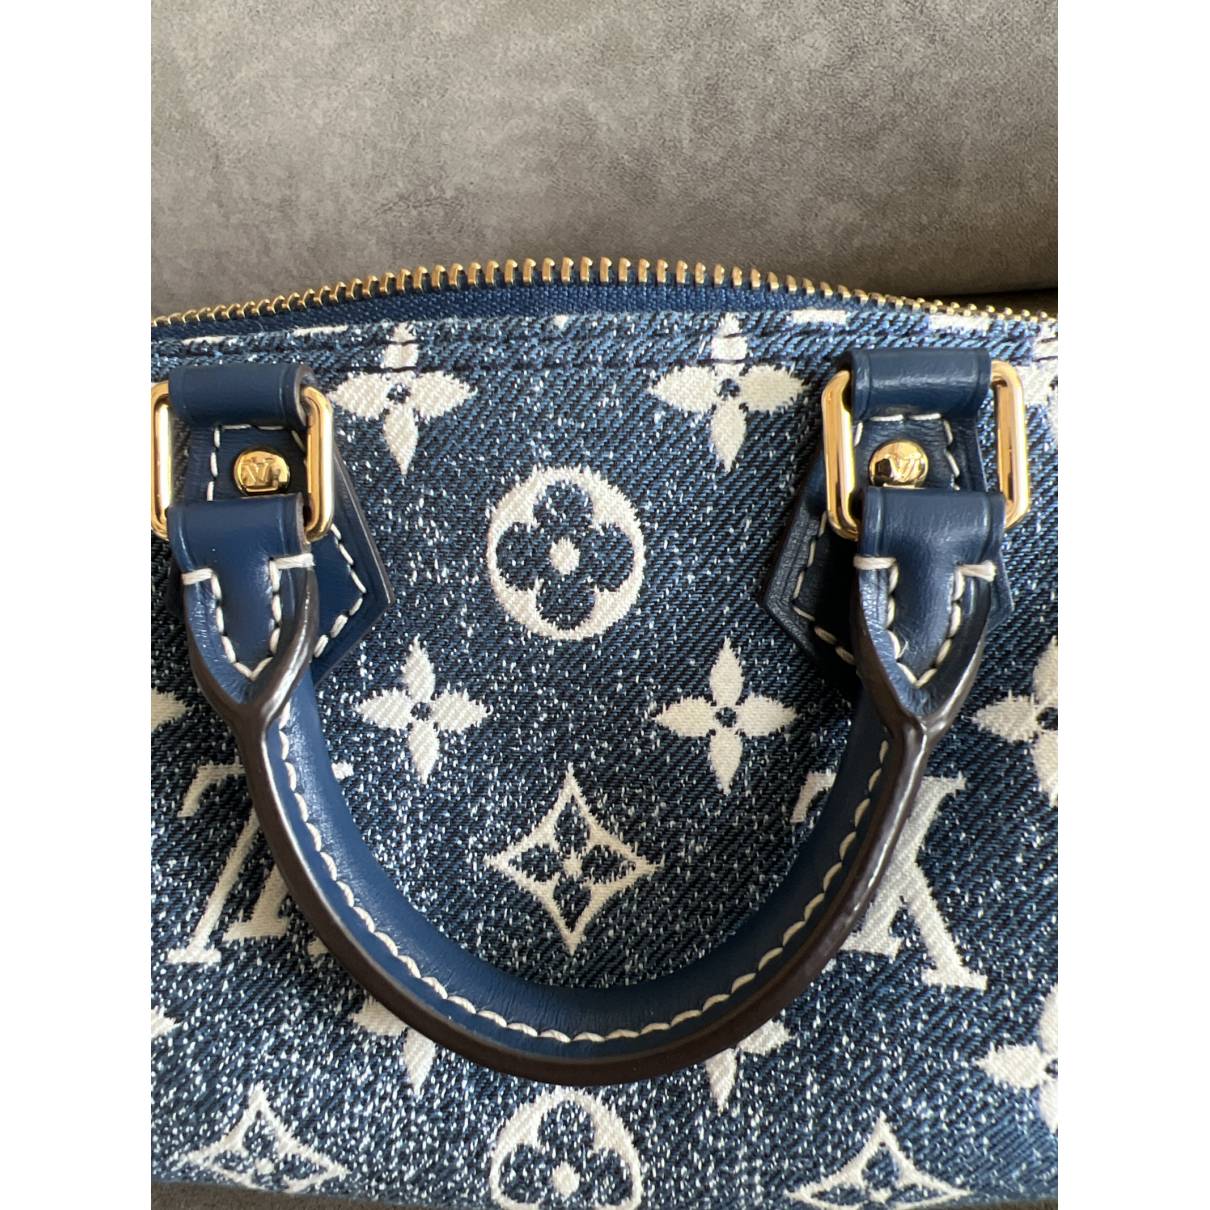 Nano speedy / mini hl handbag Louis Vuitton Blue in Denim - Jeans